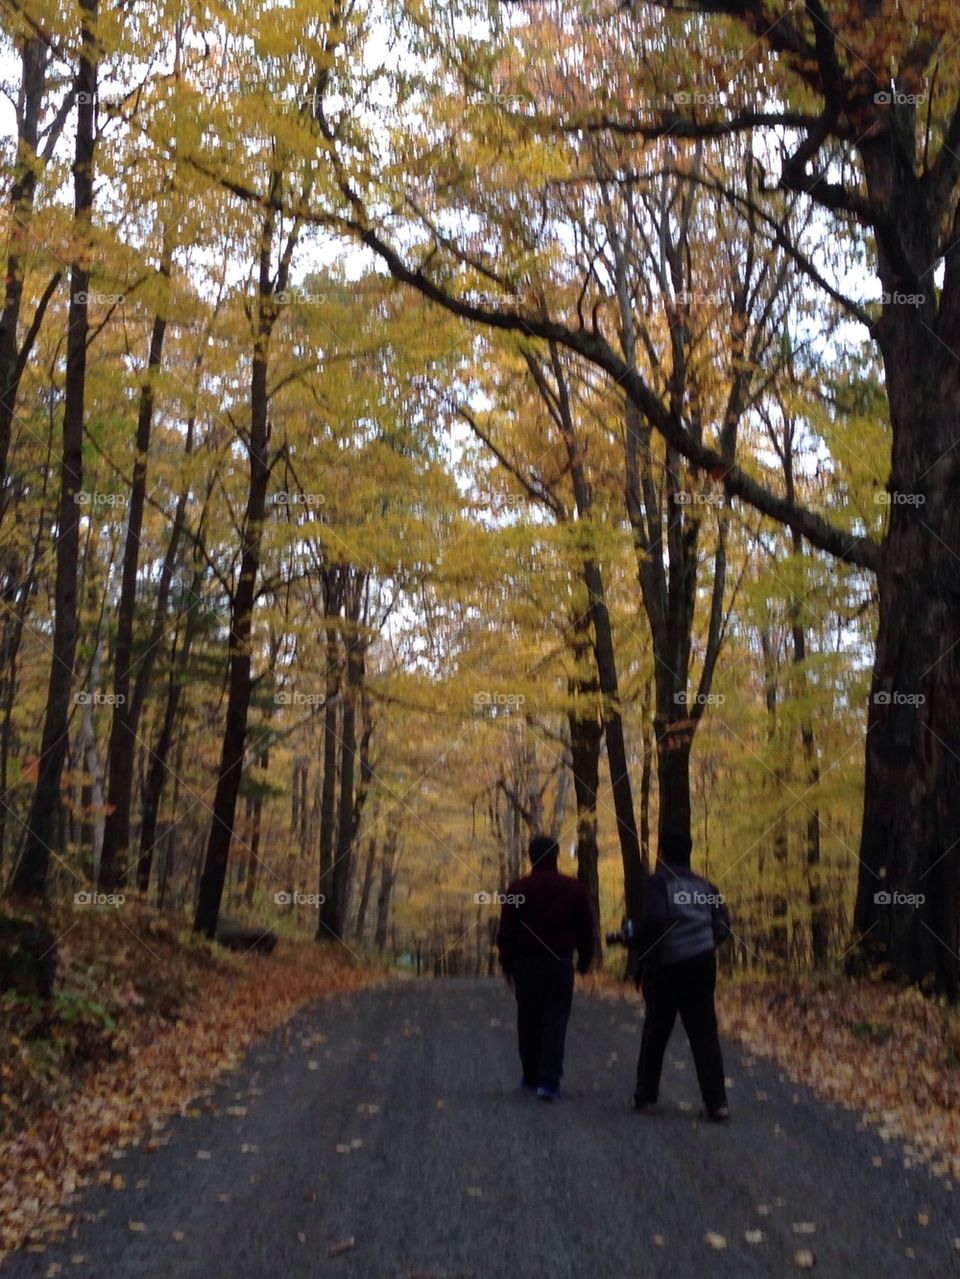 Fall 2013 - Two men walking